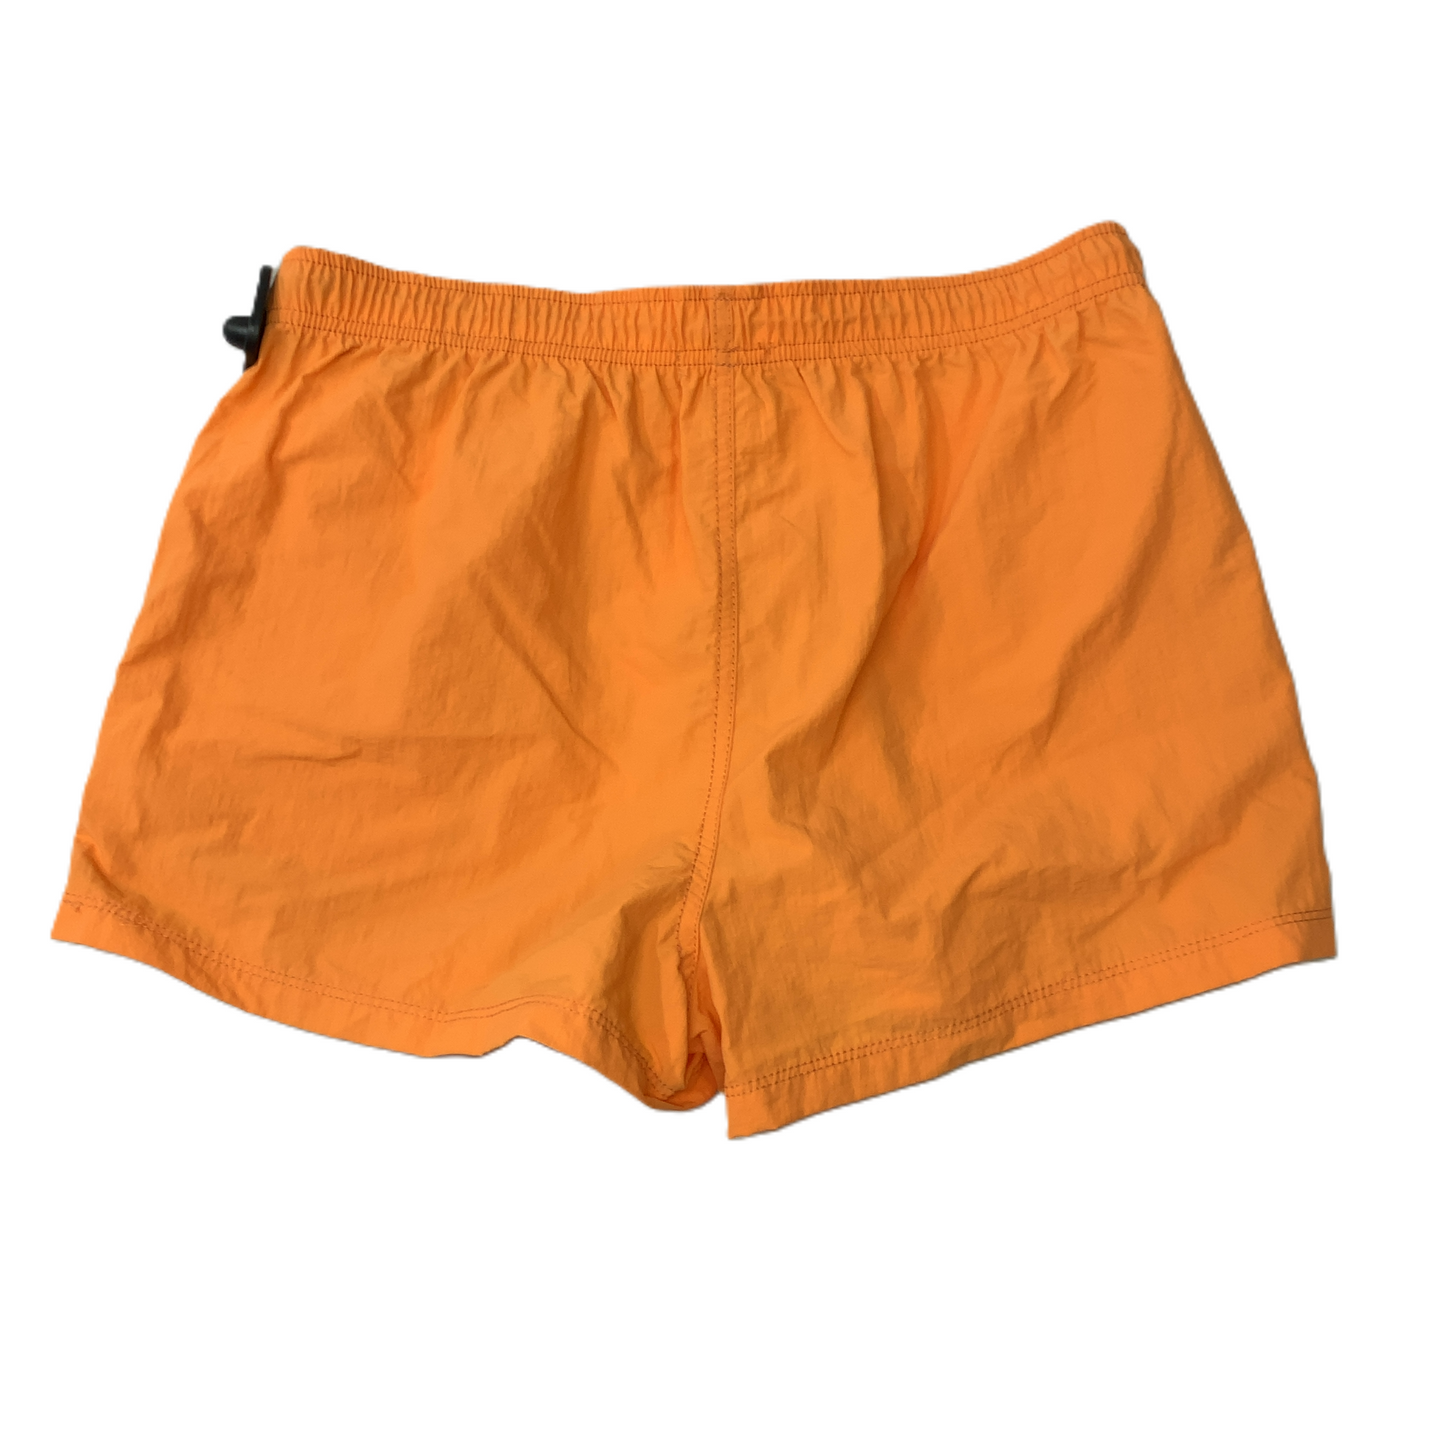 Athletic Shorts By Ultra Flirt  Size: L